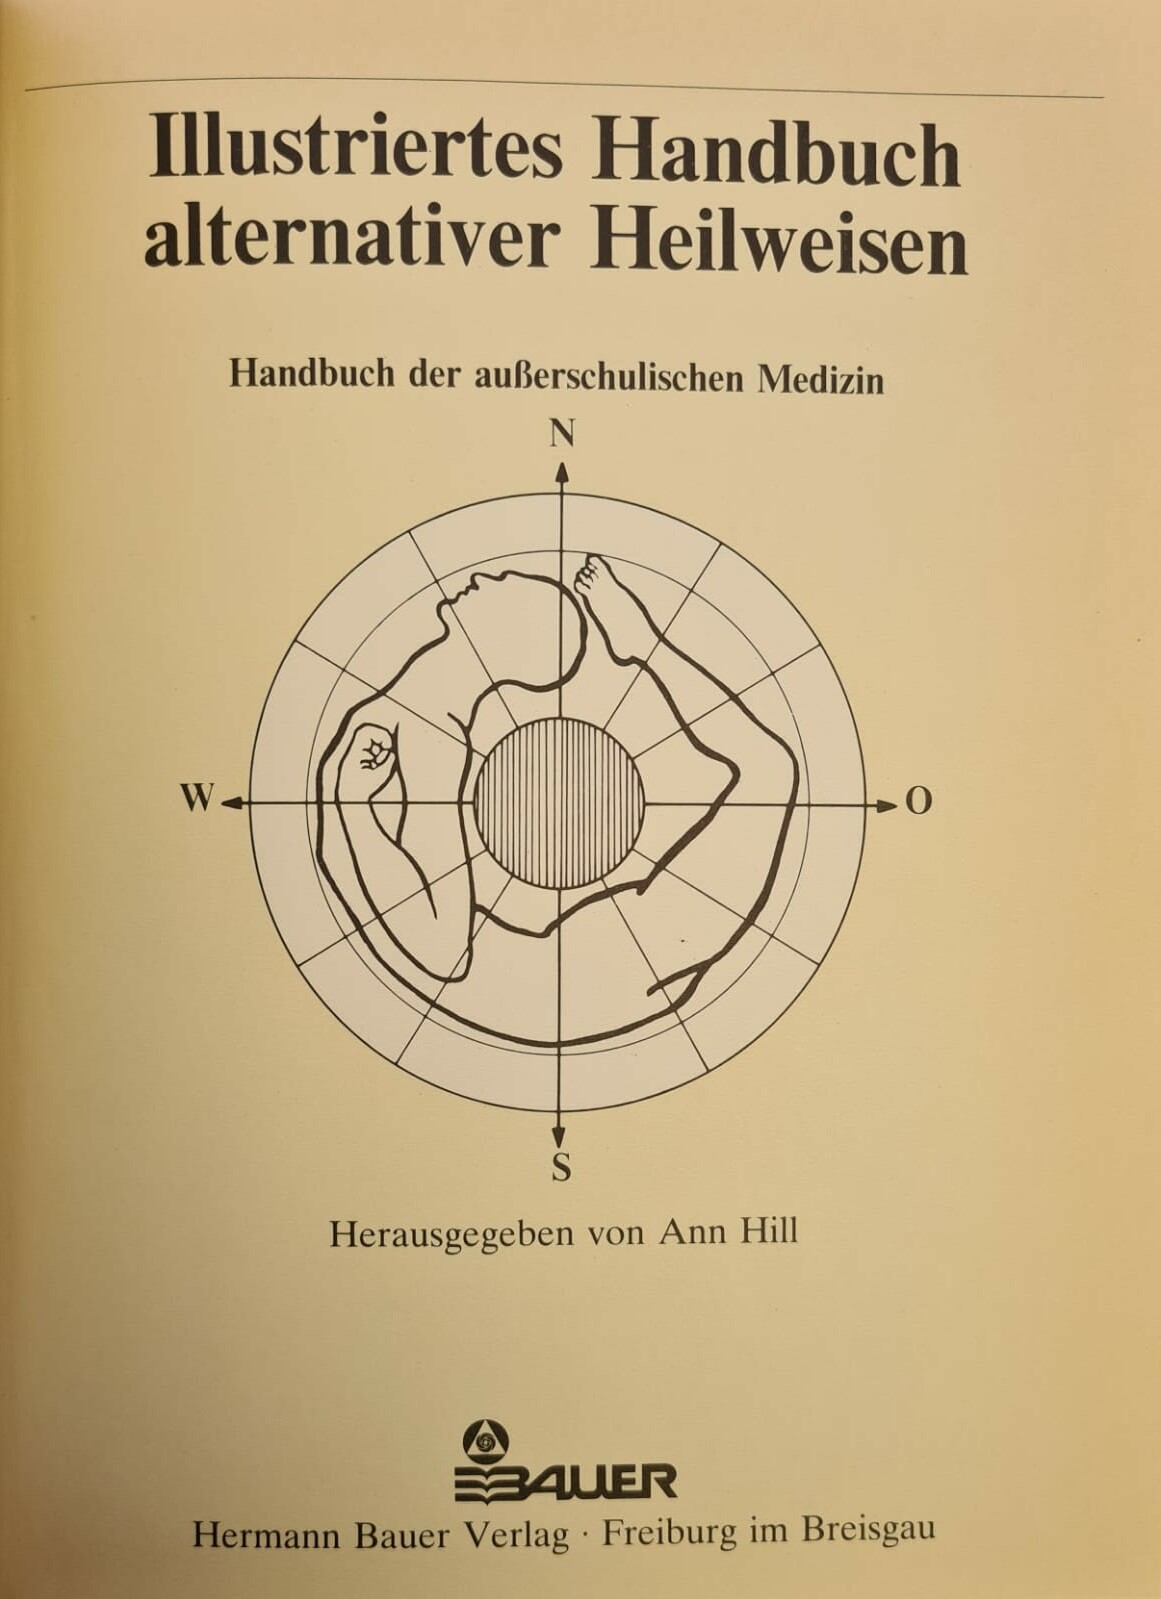 Illustriertes Handbuch alternativer Heilweisen (Krankenhausmuseum Bielefeld e.V. CC BY-NC-SA)